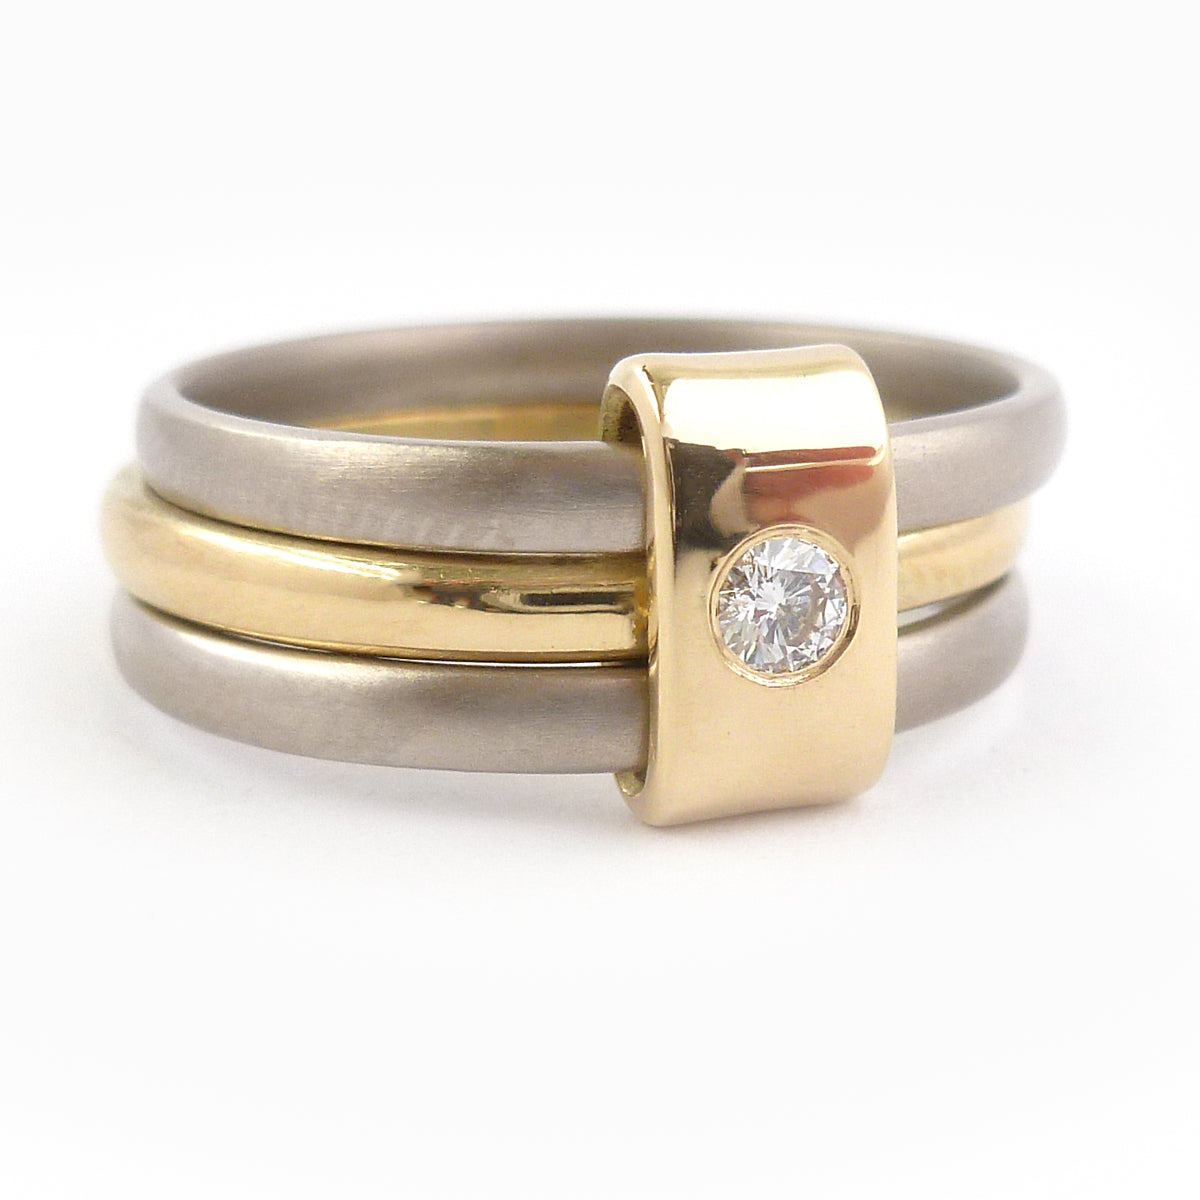 Contemporary jewellery, handmade, modern, bespoke ring by Sue Lane. Triple band ring, interlocking and linked.